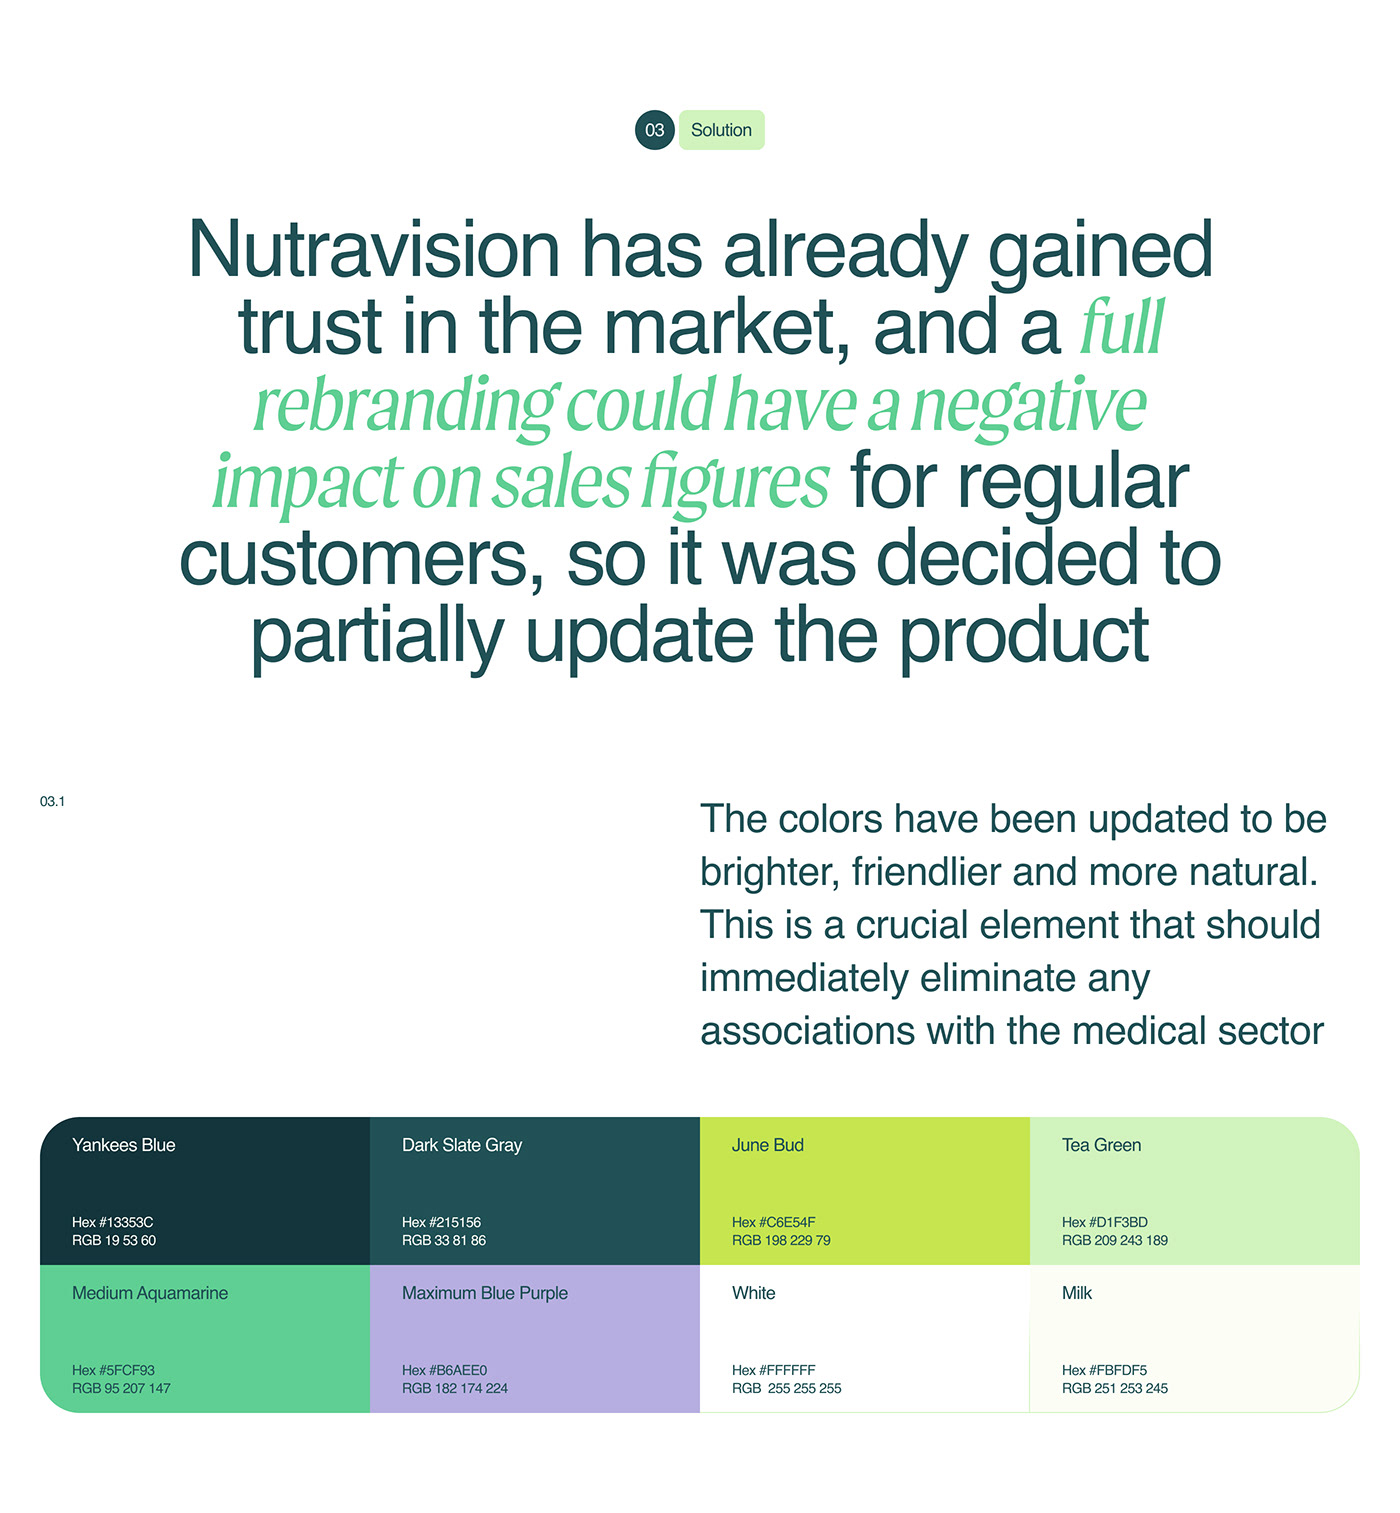 medicine Website Design nutritional supplements productdesign pharmacy vision redesign Branding design websites Health